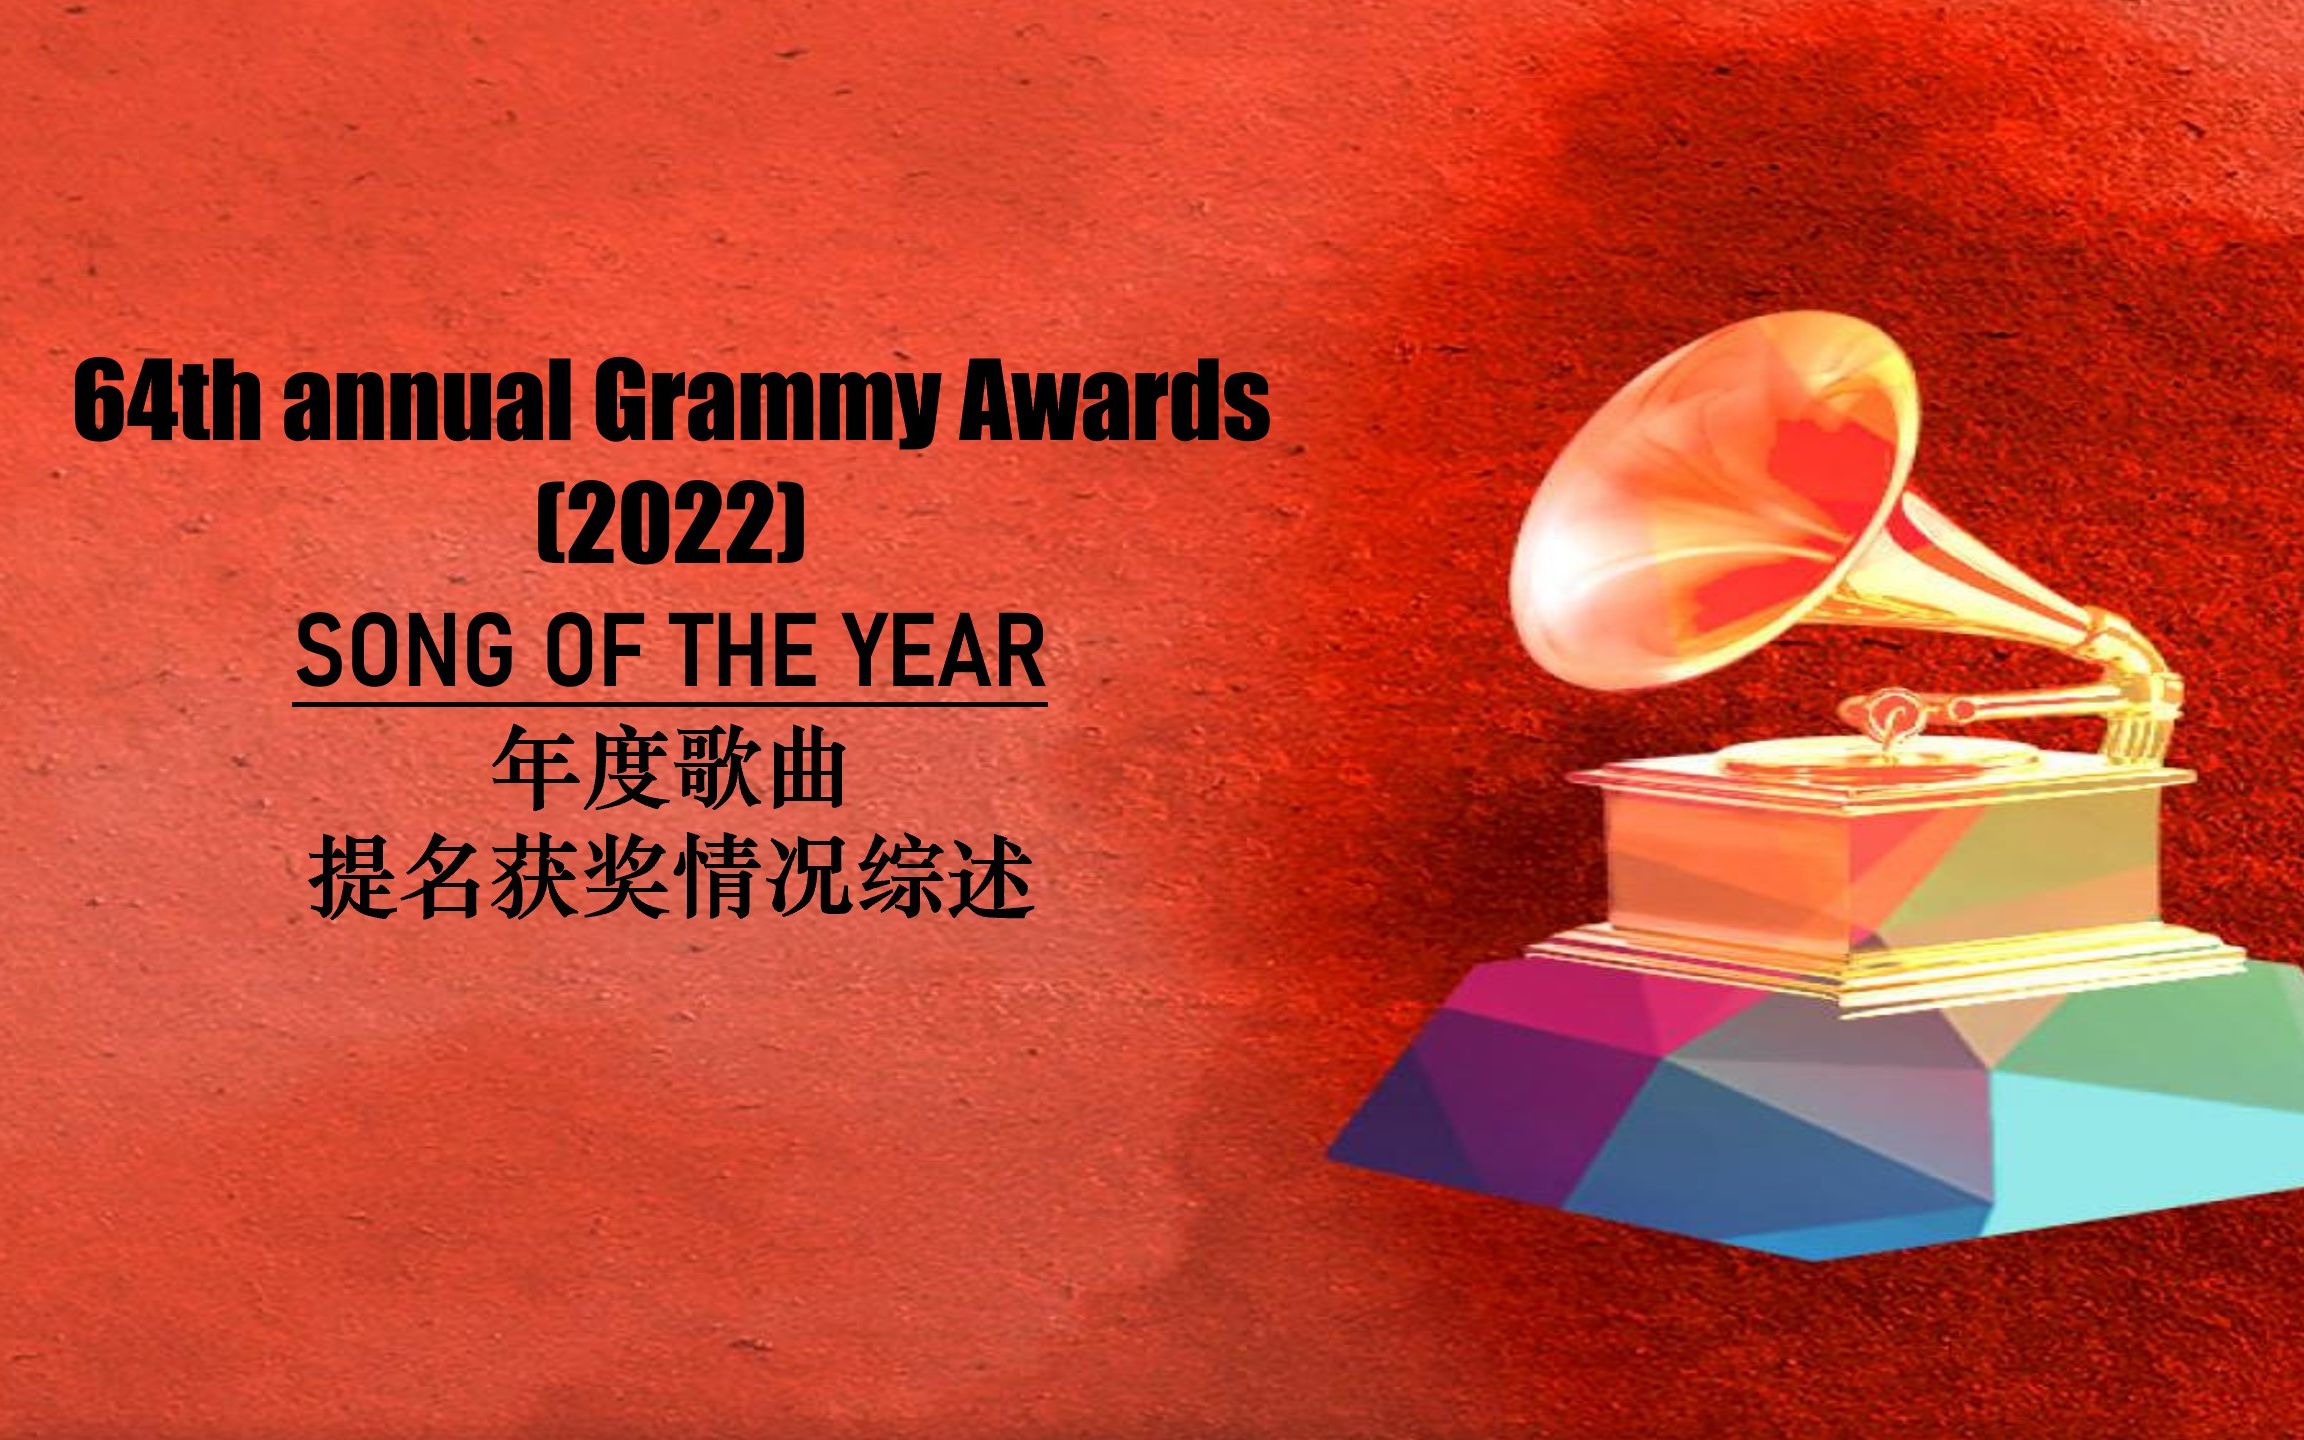 grammy格莱美2022年第64届grammy格莱美奖年度歌曲songoftheyear提名